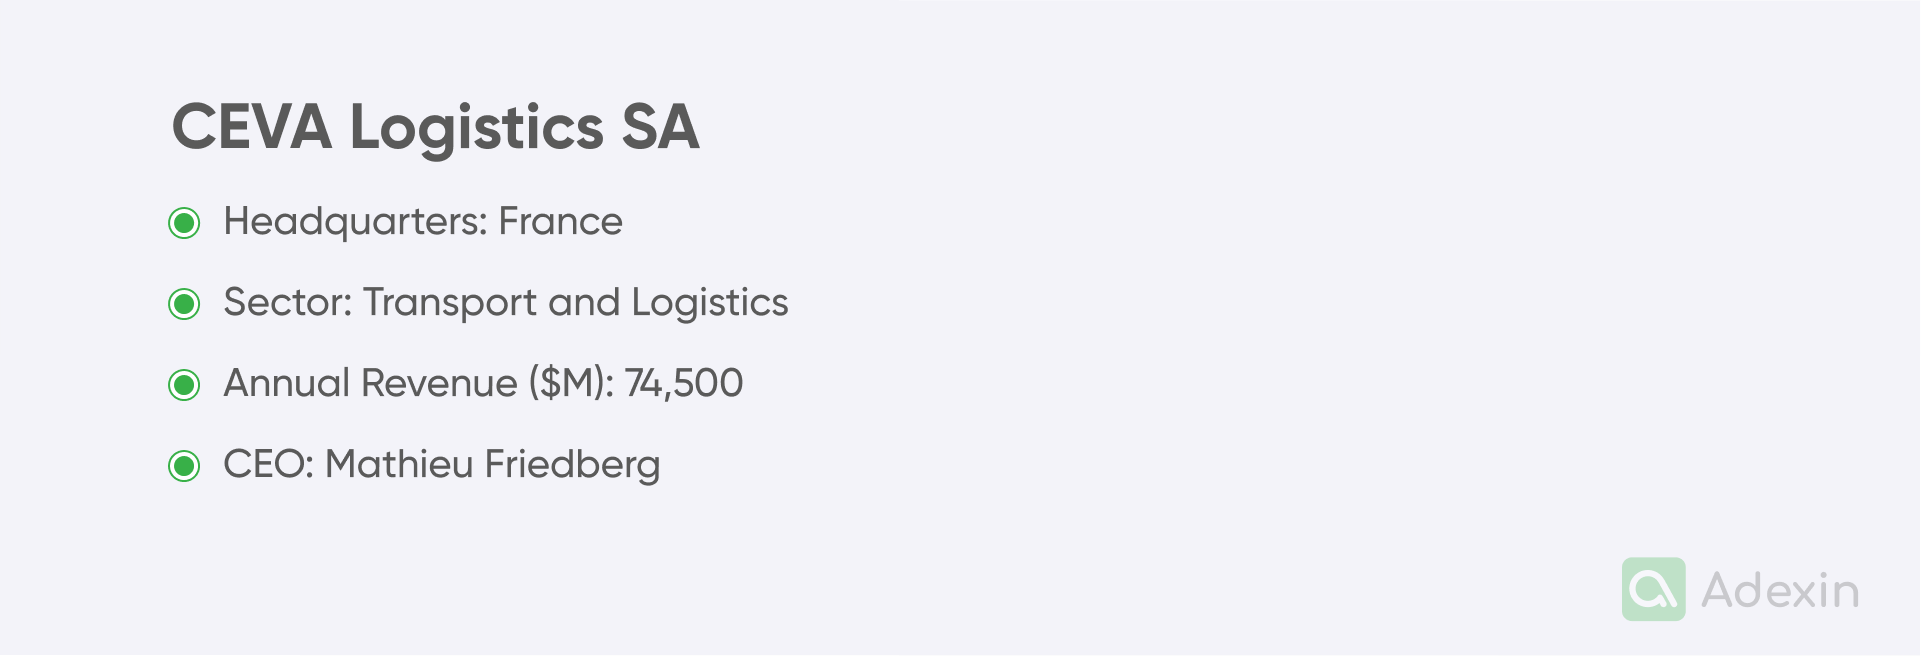 CEVA Logistics SA basic data